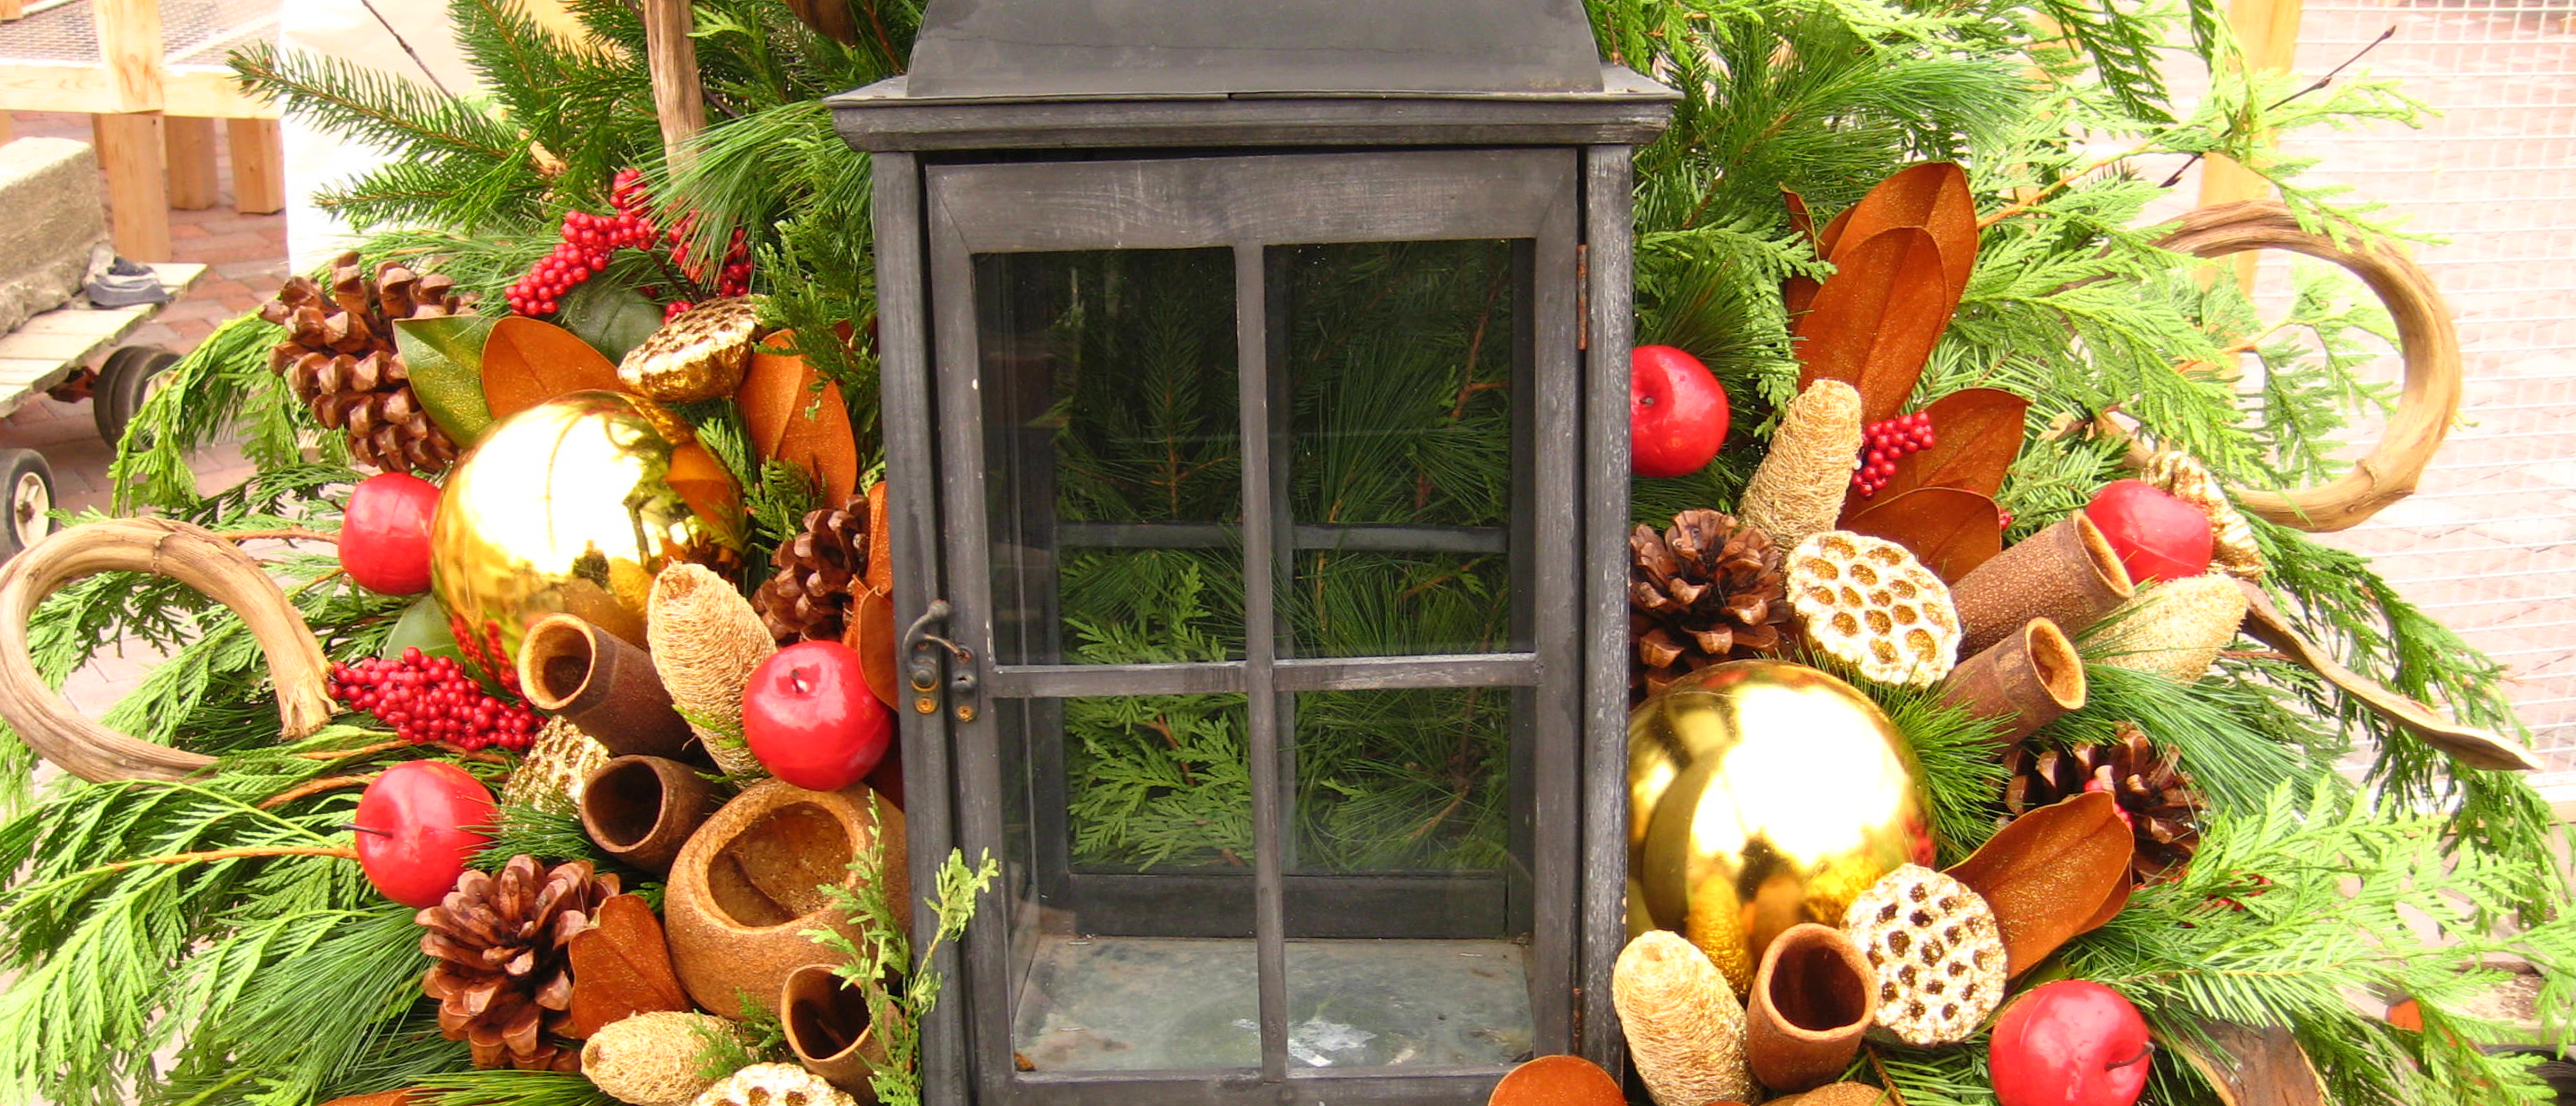 Find Seasonal Decorating options at Johnston's Greenhouse